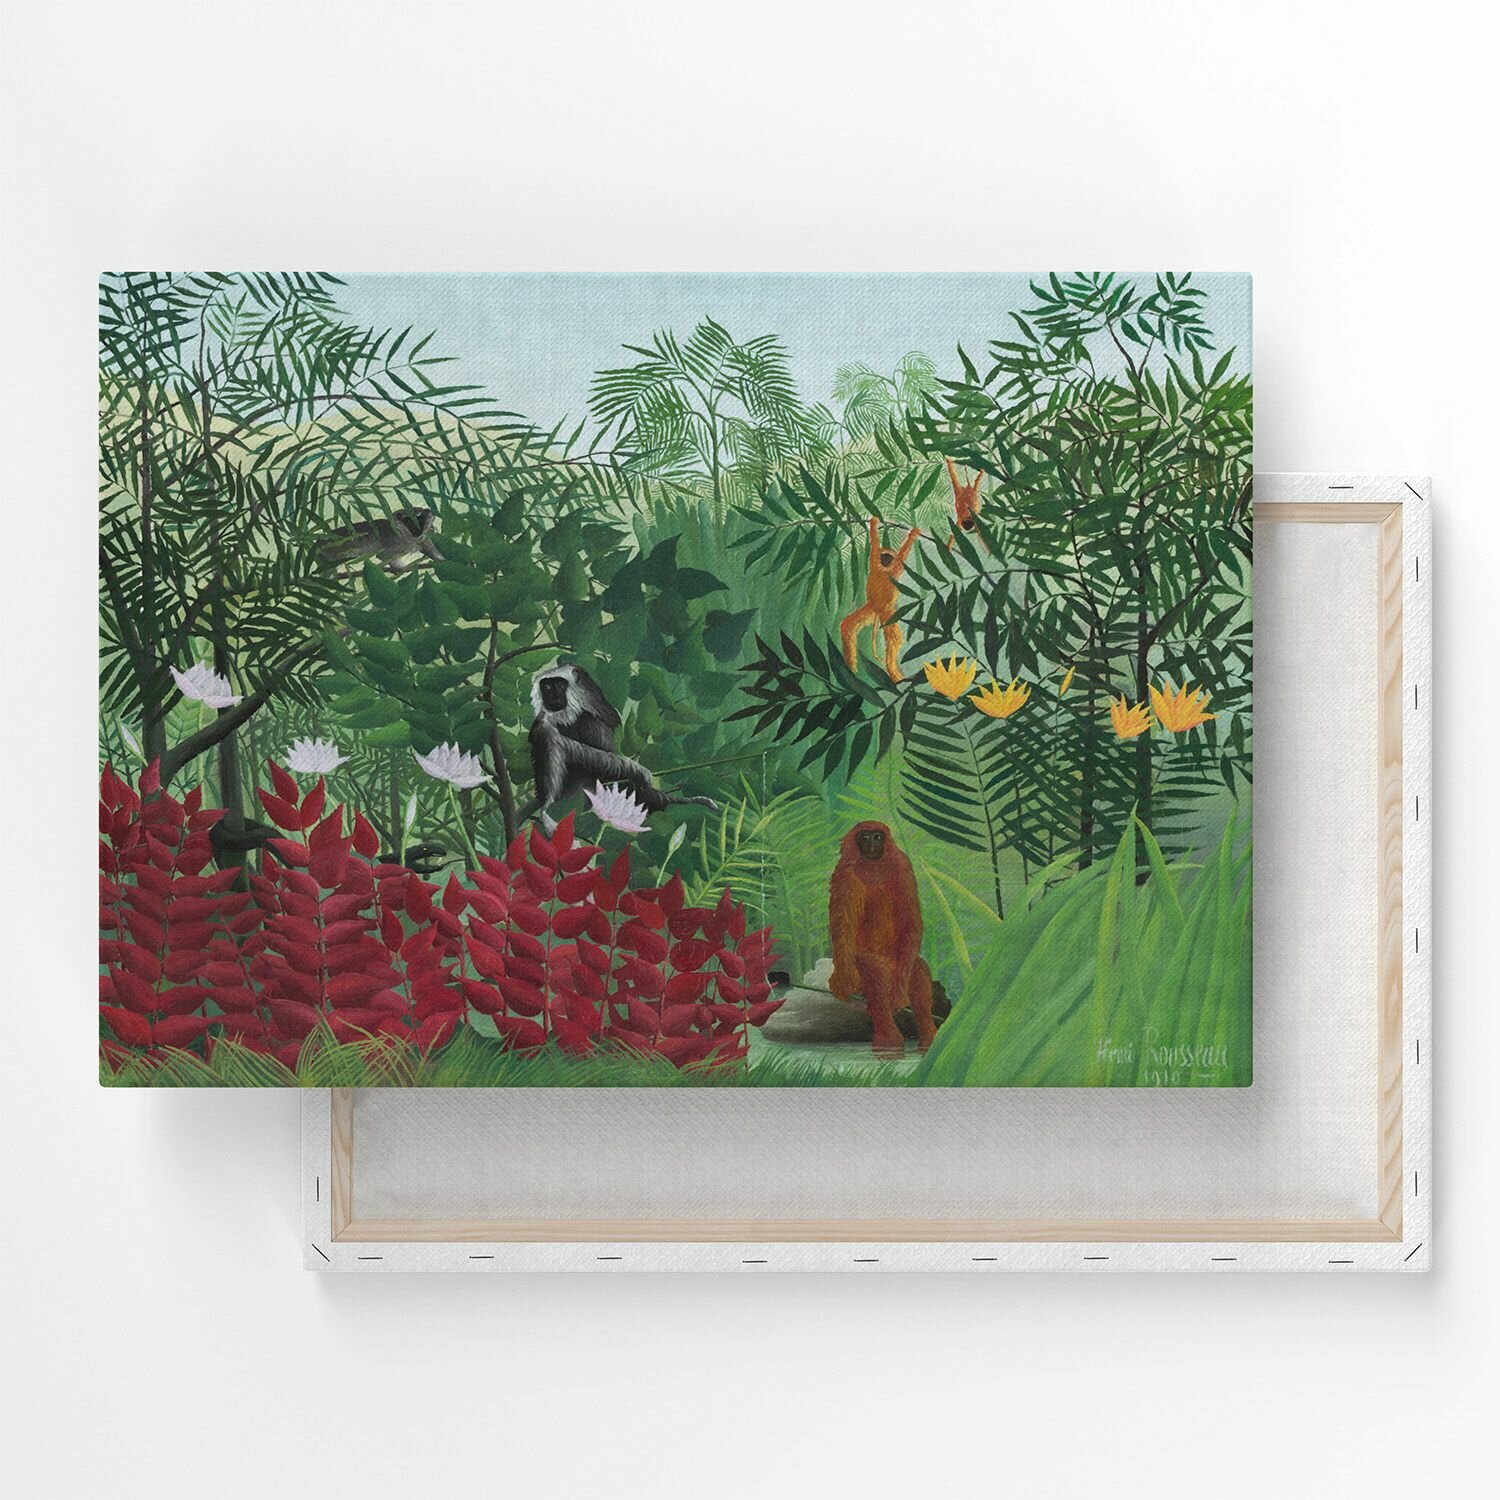 Картина на холсте репродукция / Анри Руссо - Tropical Forest with Monkeys / Размер 80 x 106 см